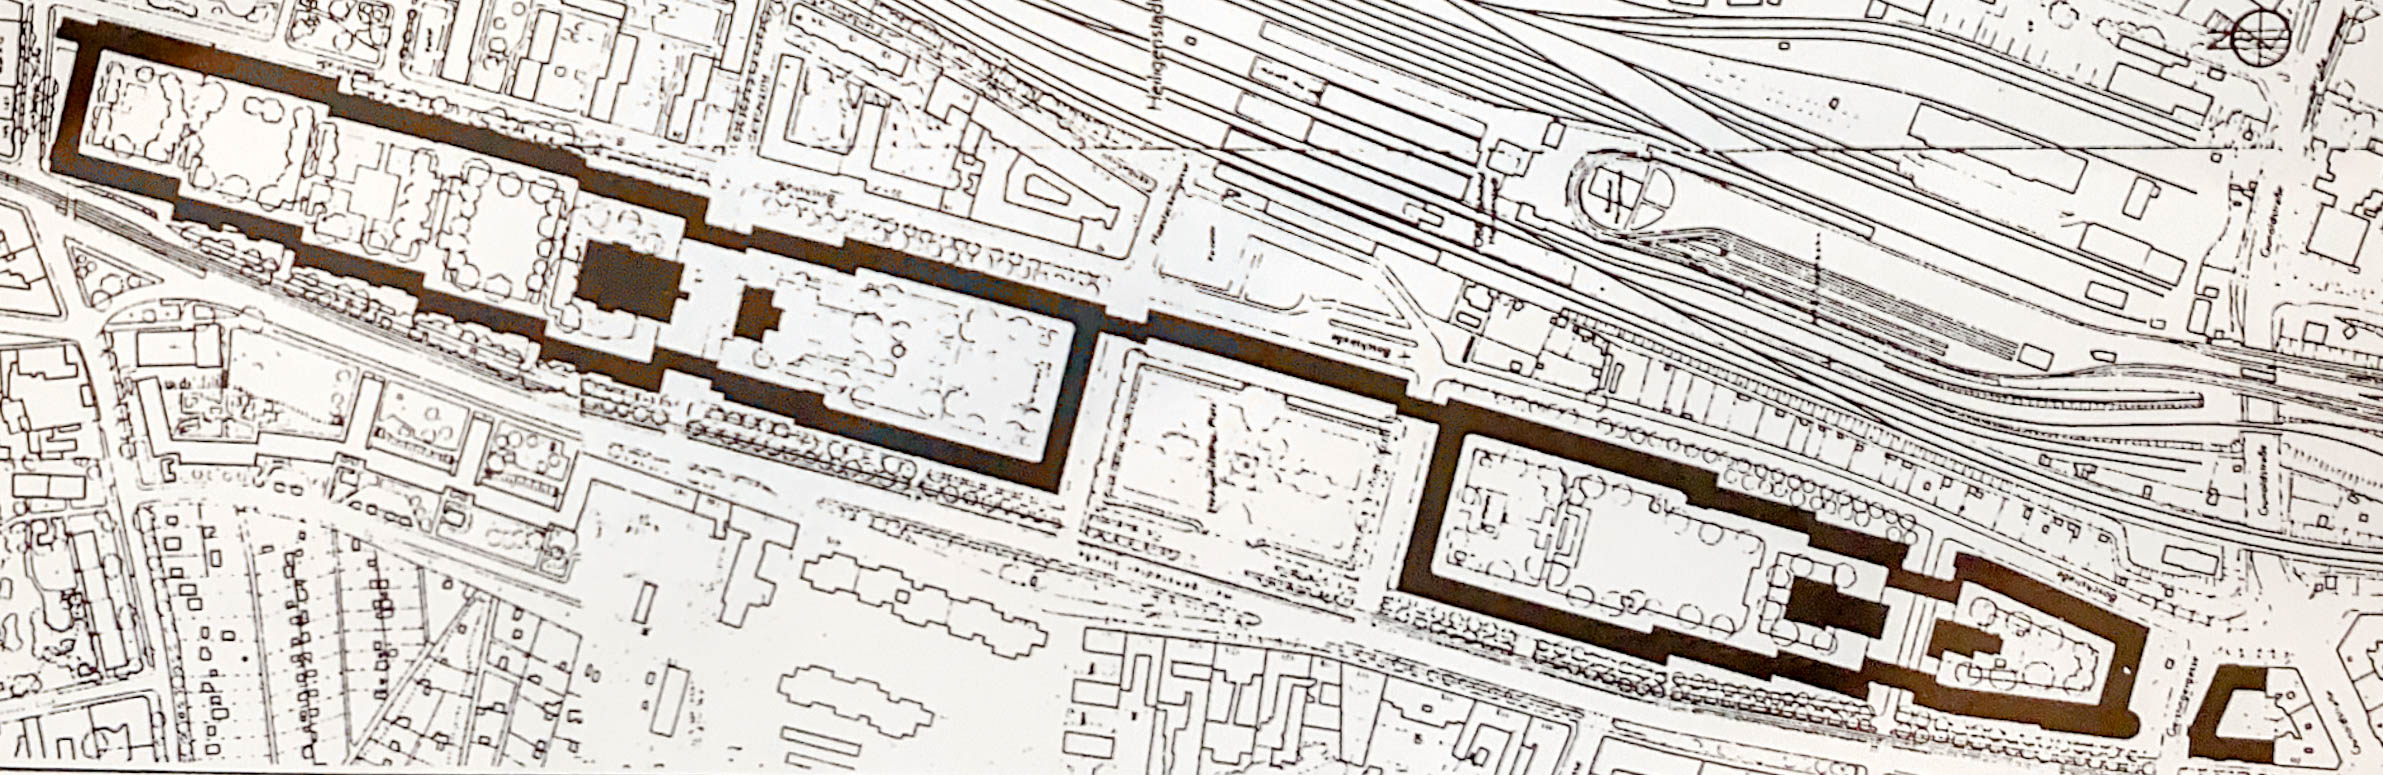 Karl-Marx-Hof, site plan, 1926-1930. Architect: Karl Ehn